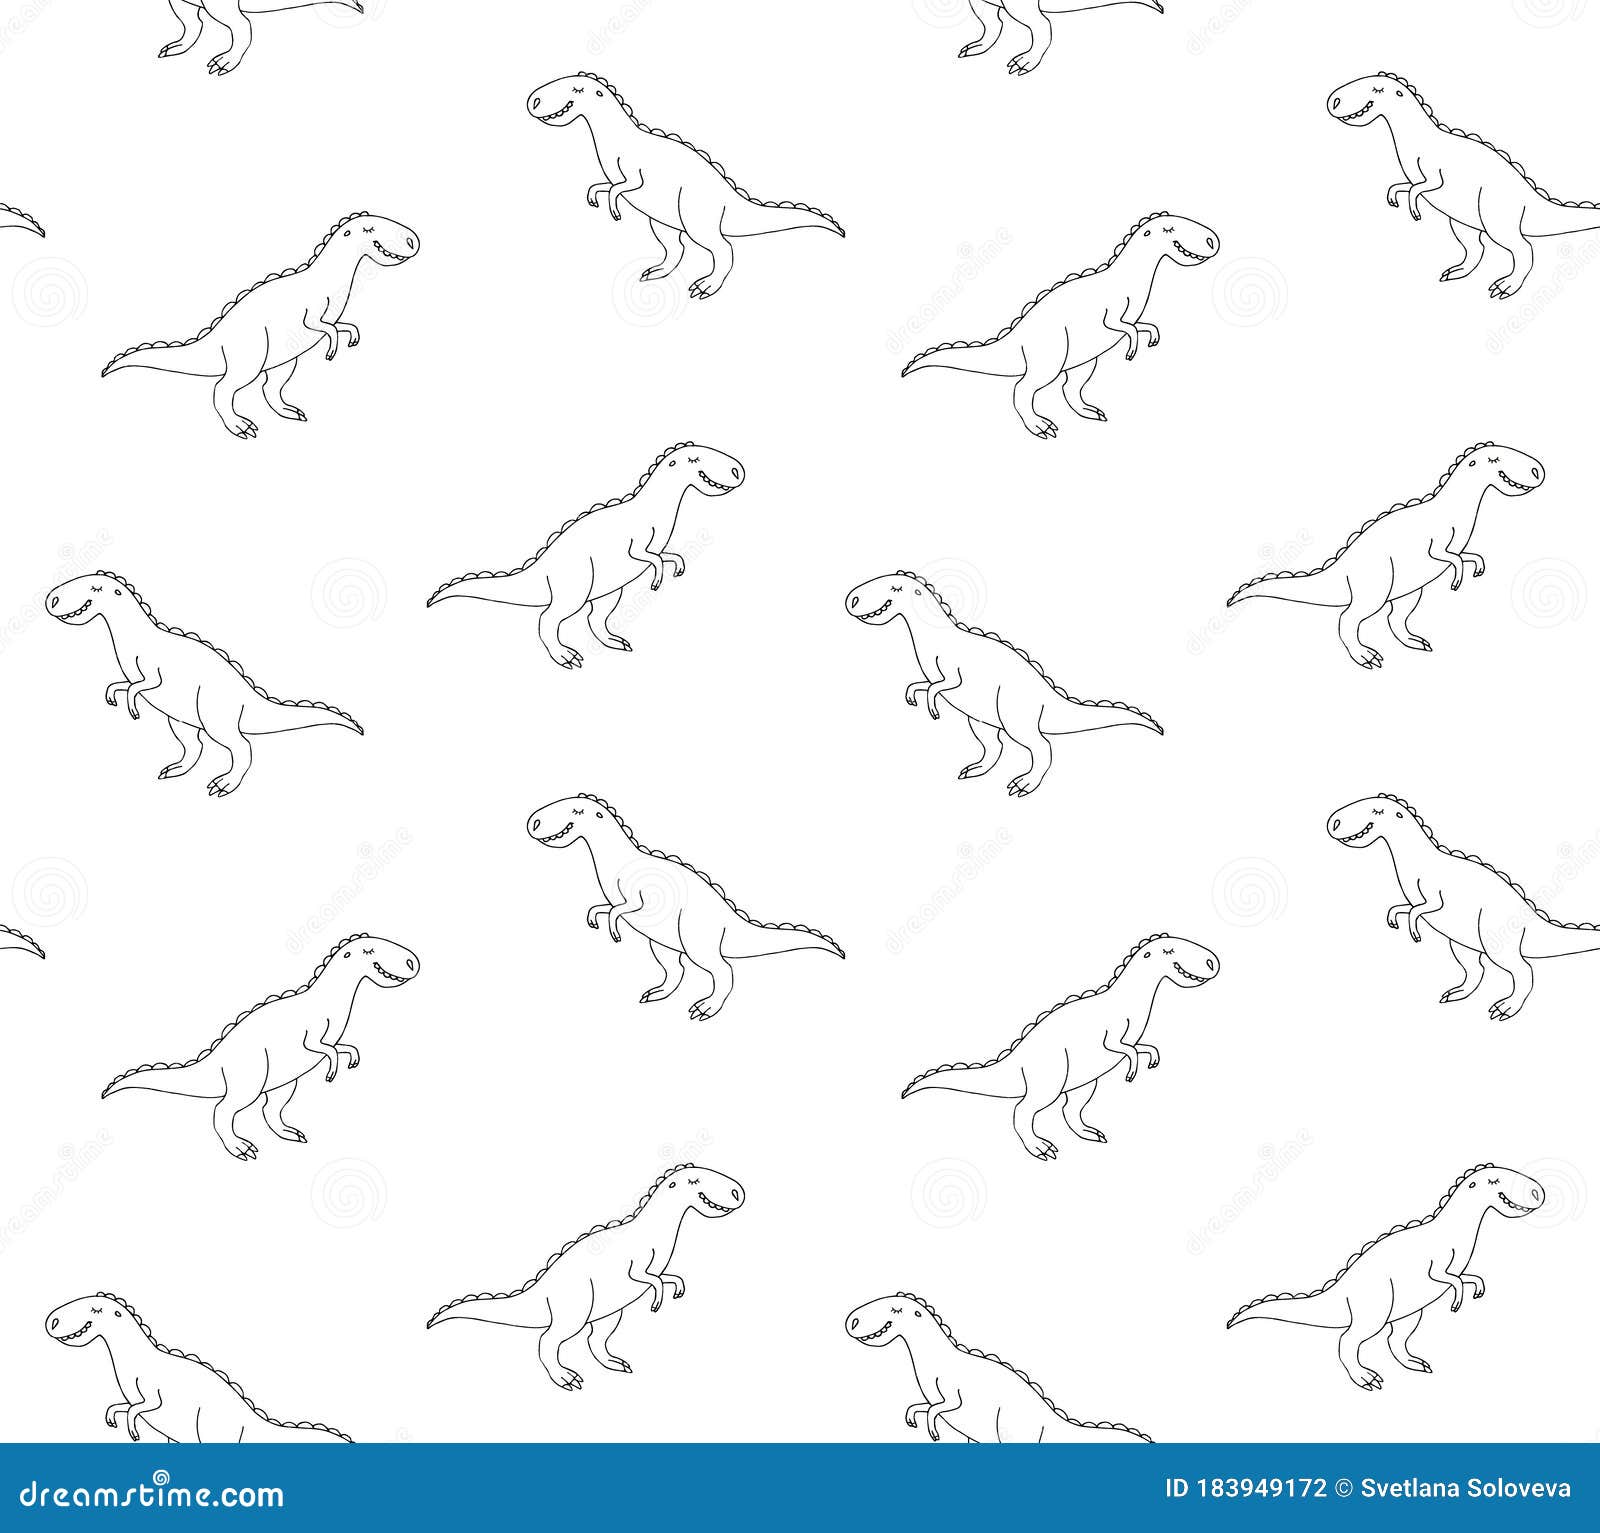 Vector Seamless Pattern of Sketch Tyrannosaur Rex Stock Illustration ...